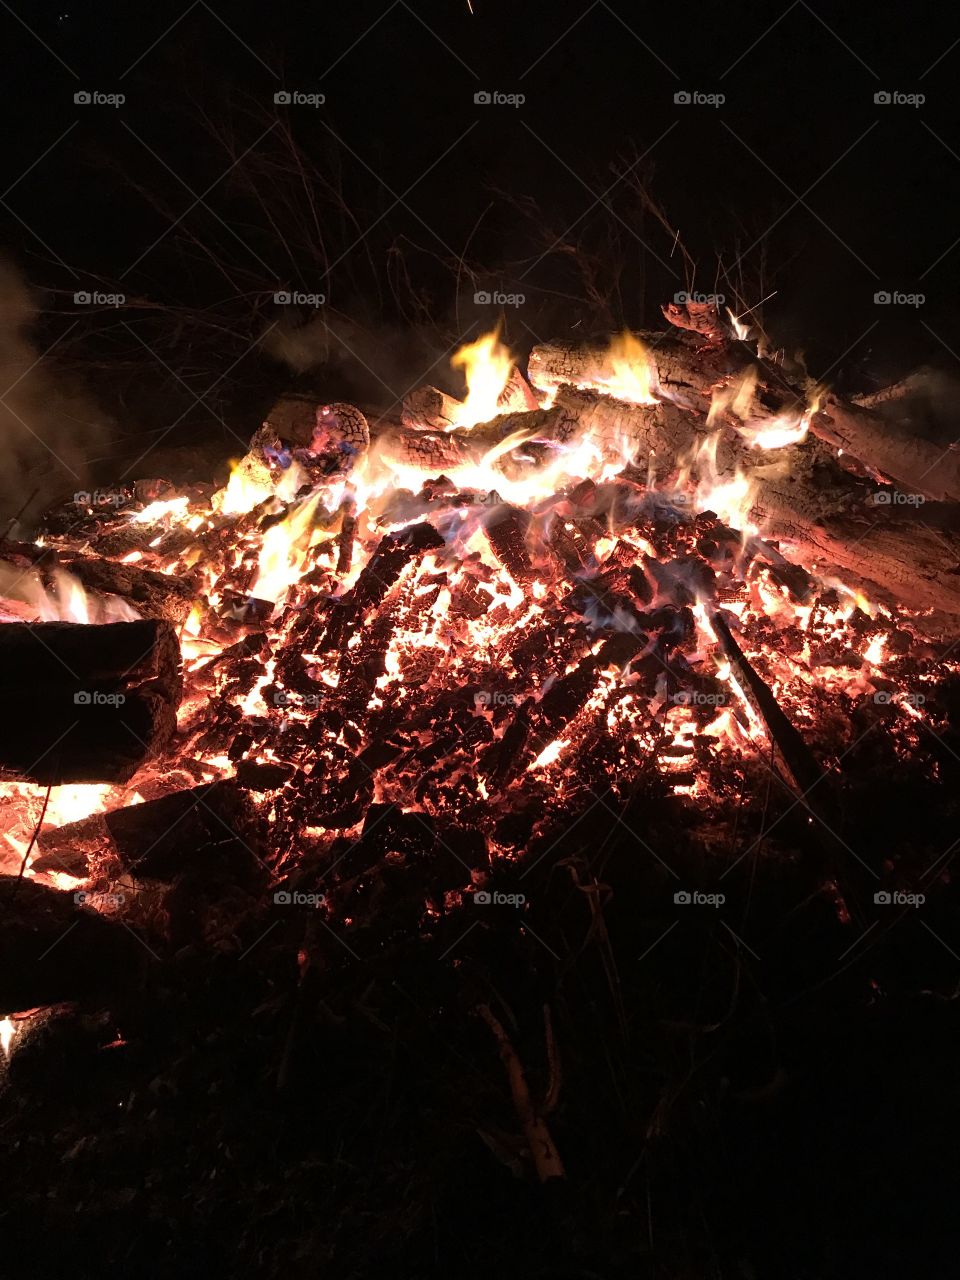 Fire
Bonfire 
Wood 
Night
Nite
Fall